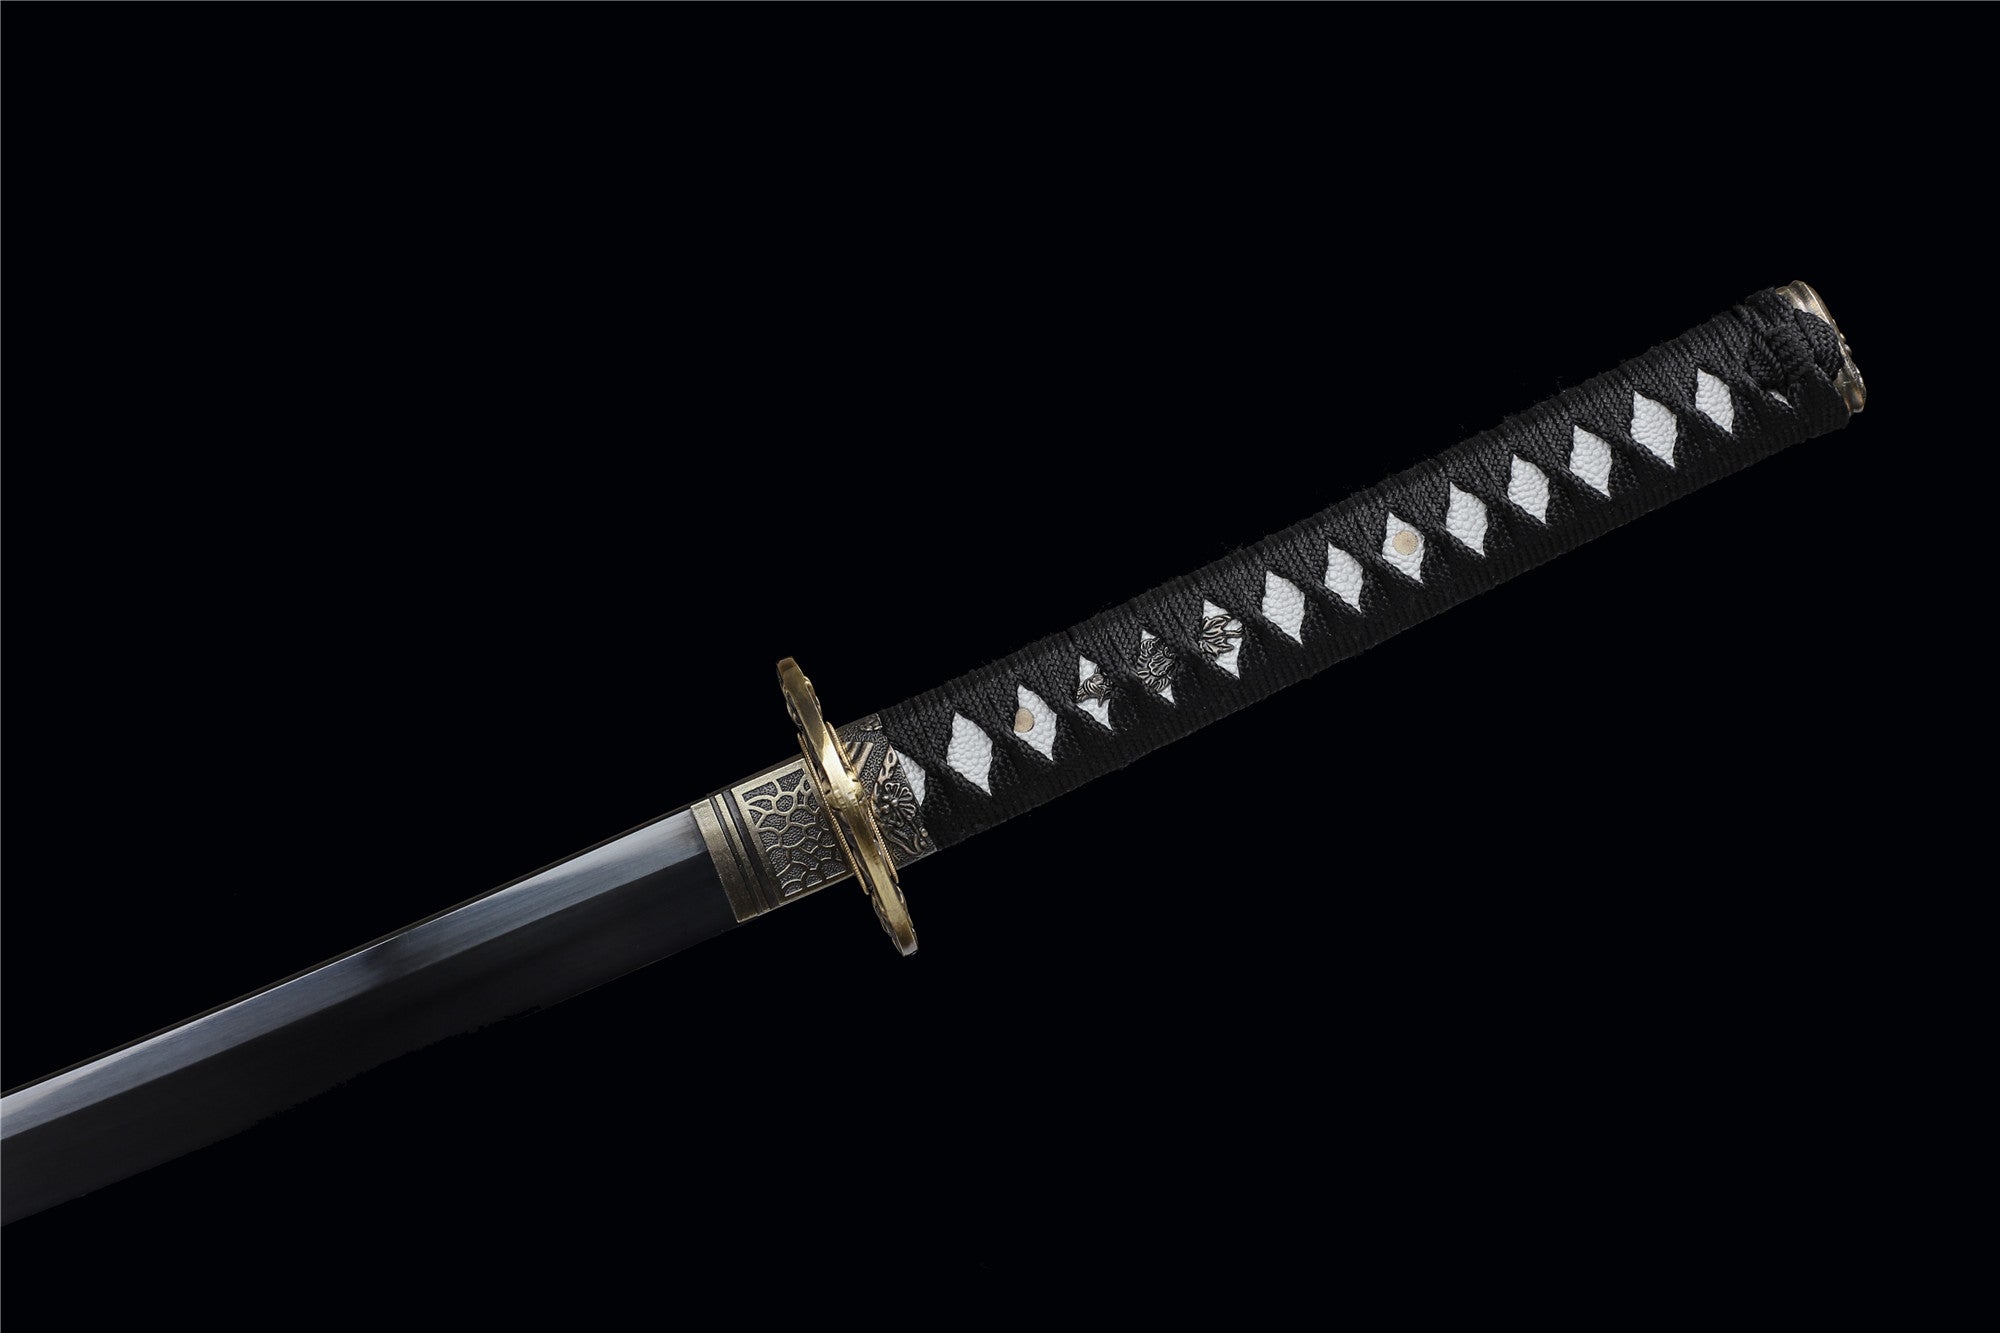 Hyakkiyakou Katana Sword,Japanese Samurai Sword,Real Handmade Katana,High Manganese Steel